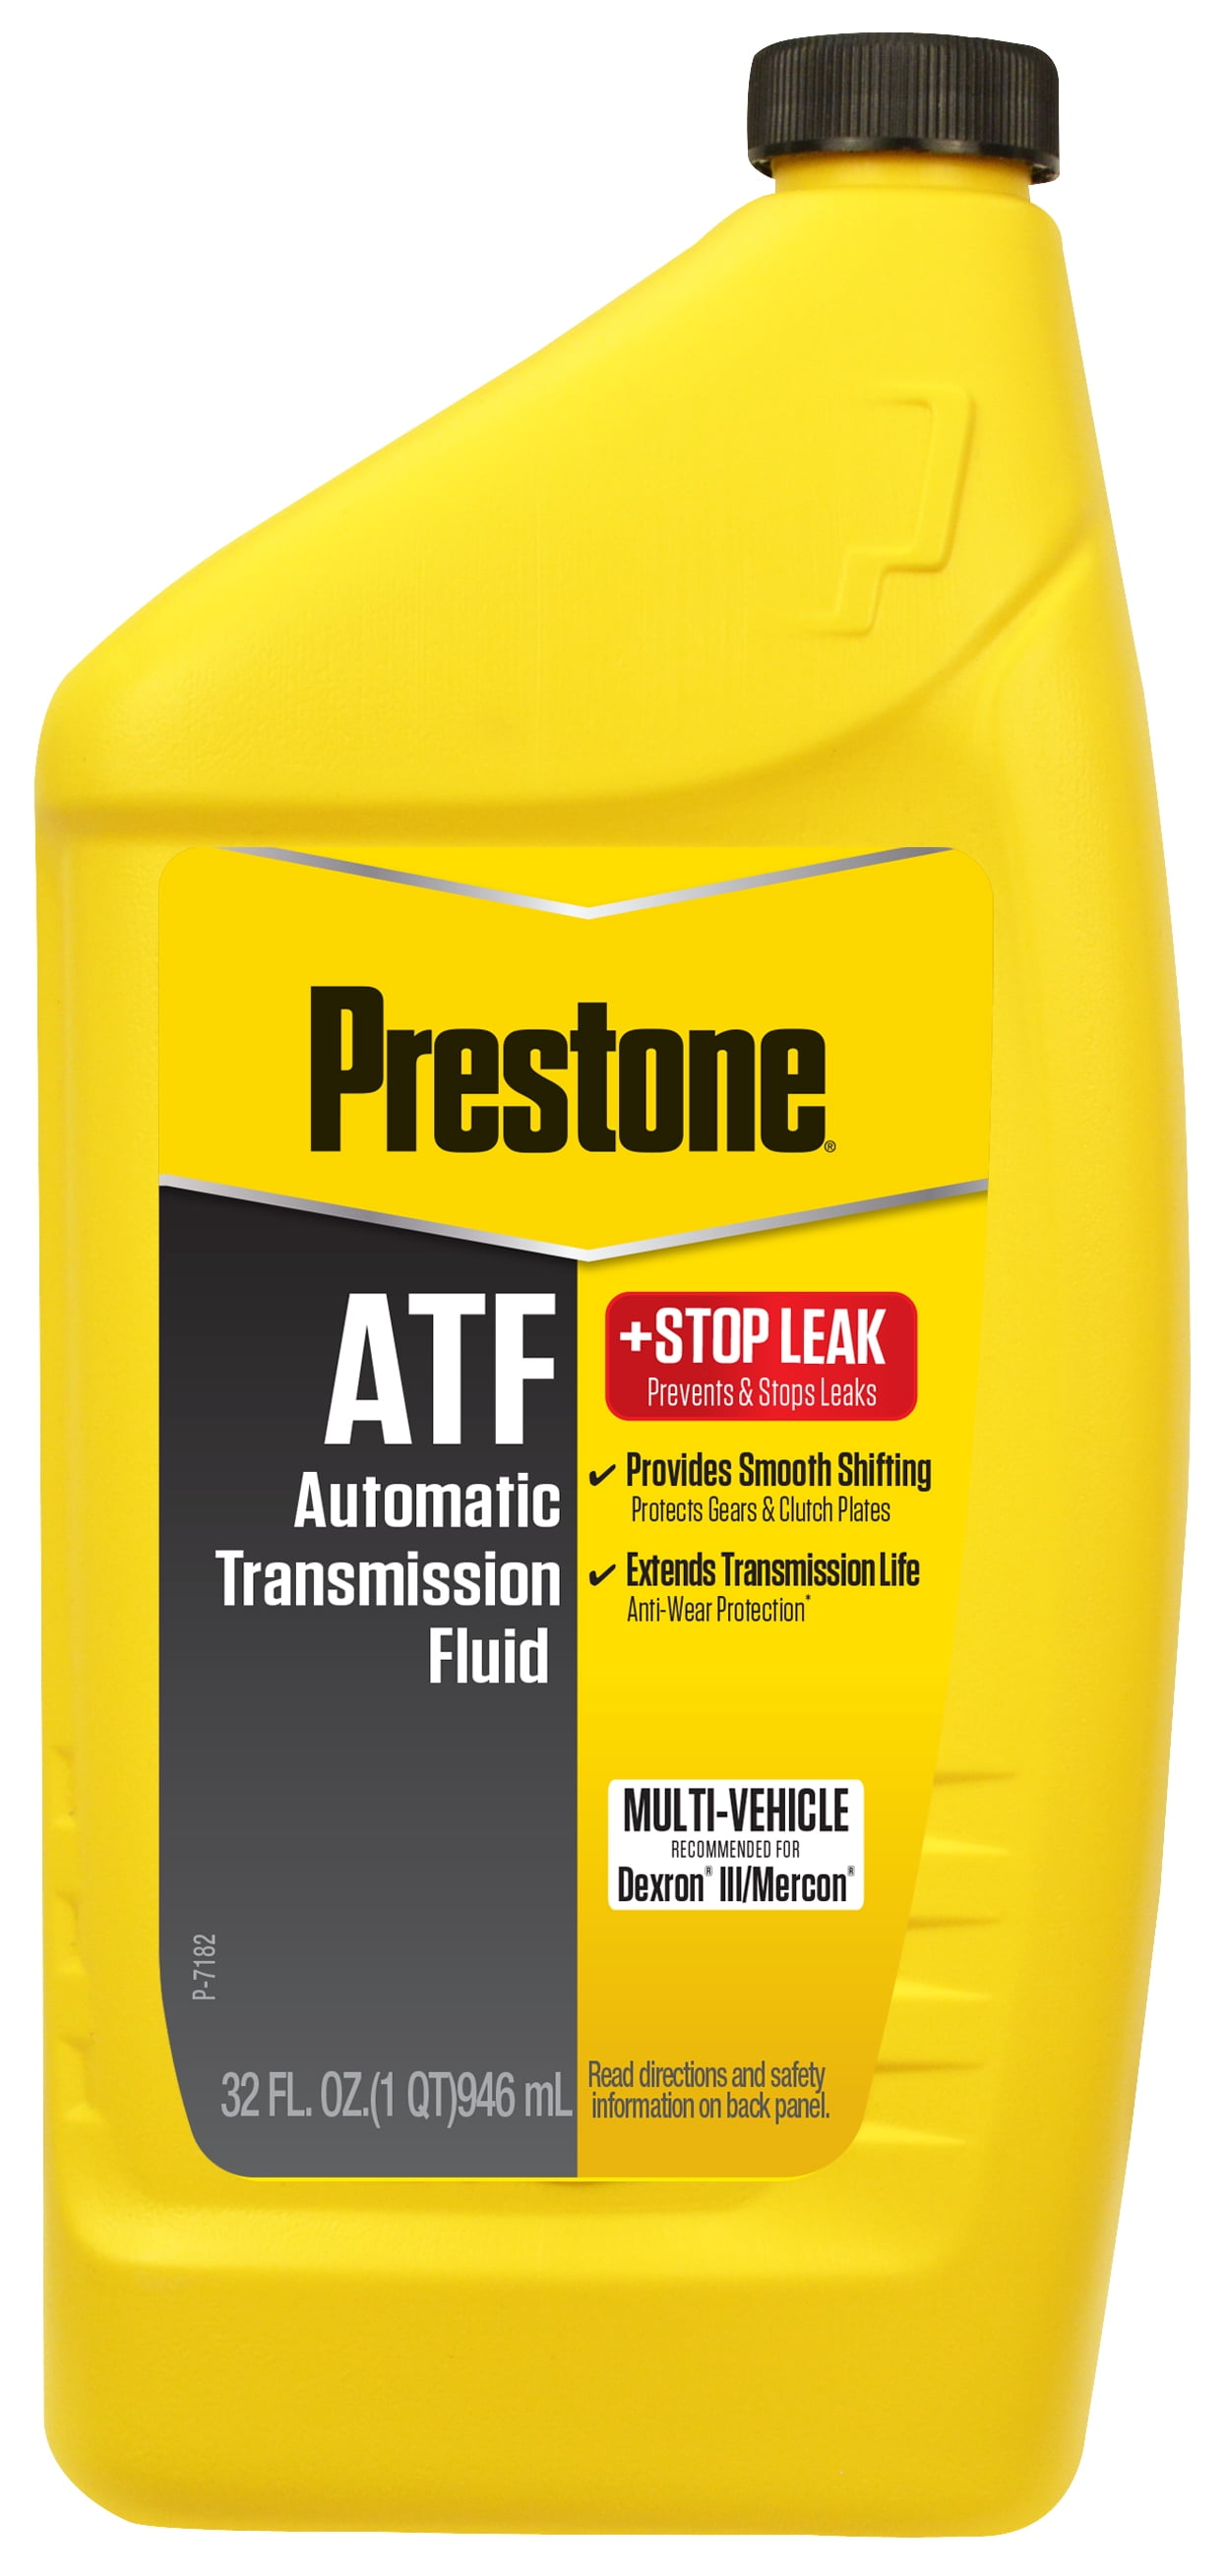 Prestone ATF + Stop Leak Automatic Transmission Fluid, 32 oz (1 Quart)